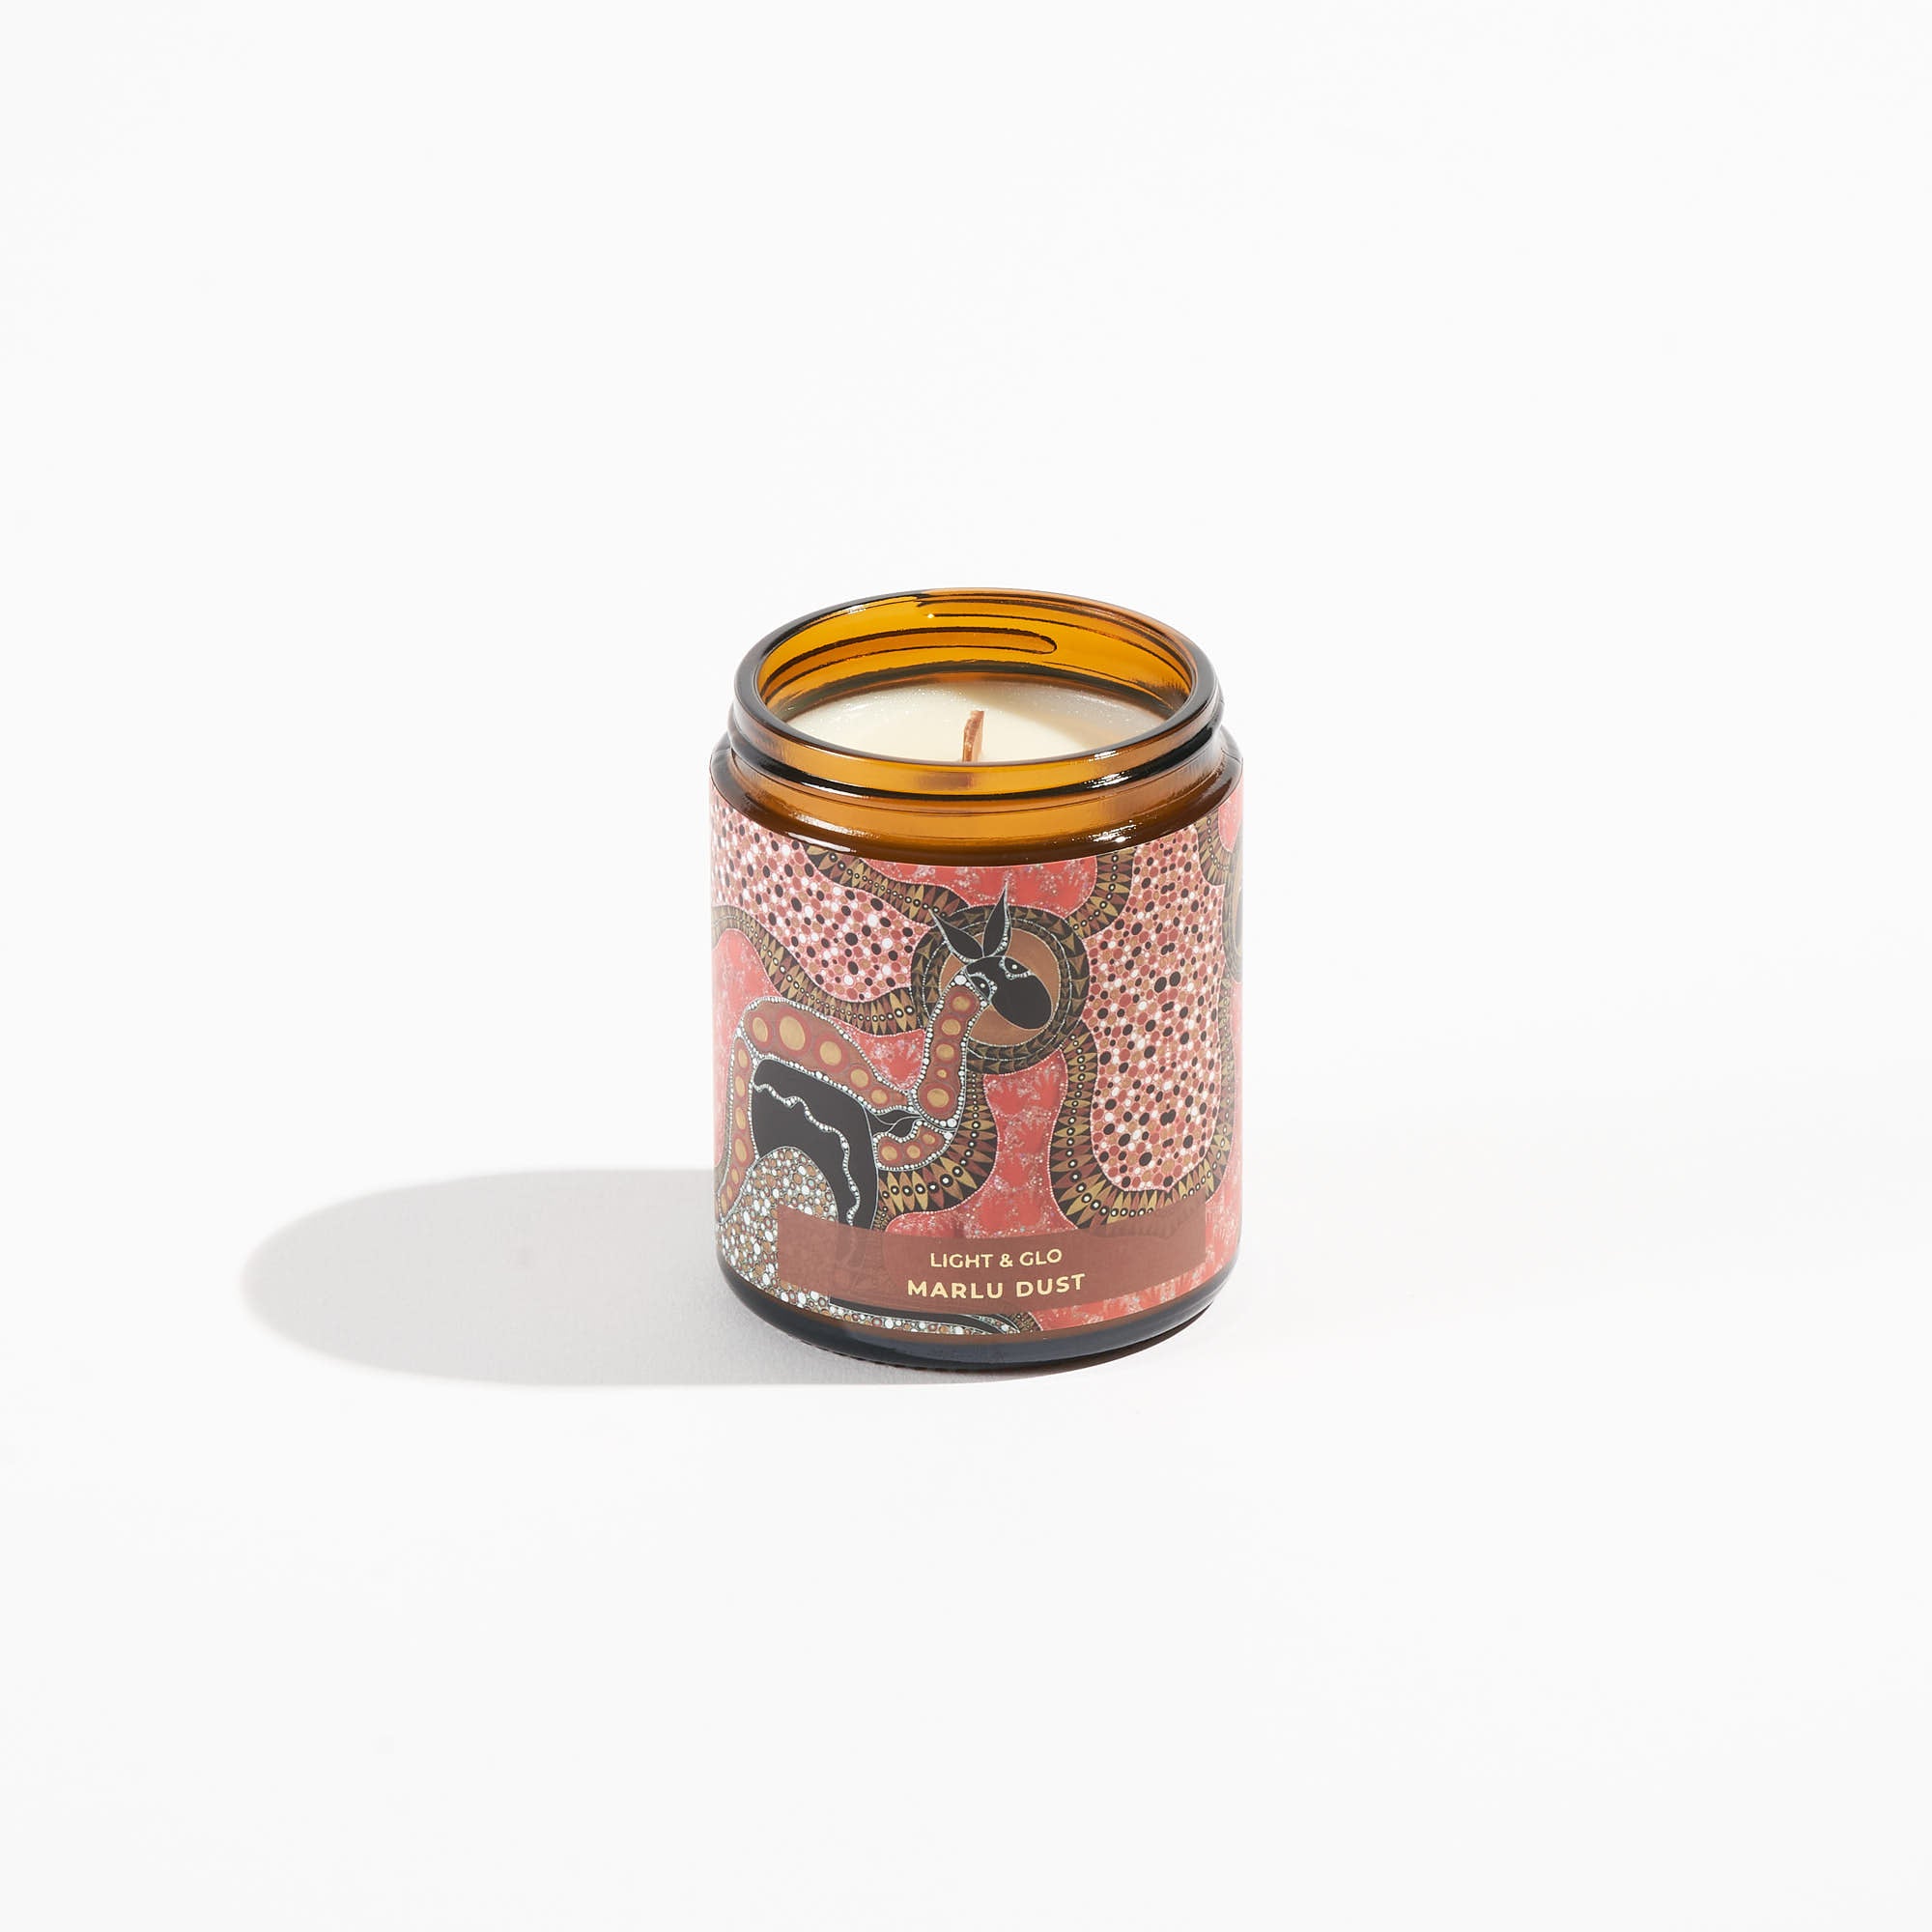 Soul Australiana  - Marlu Dust | Luxury Candles & Home Fragrances by Light + Glo